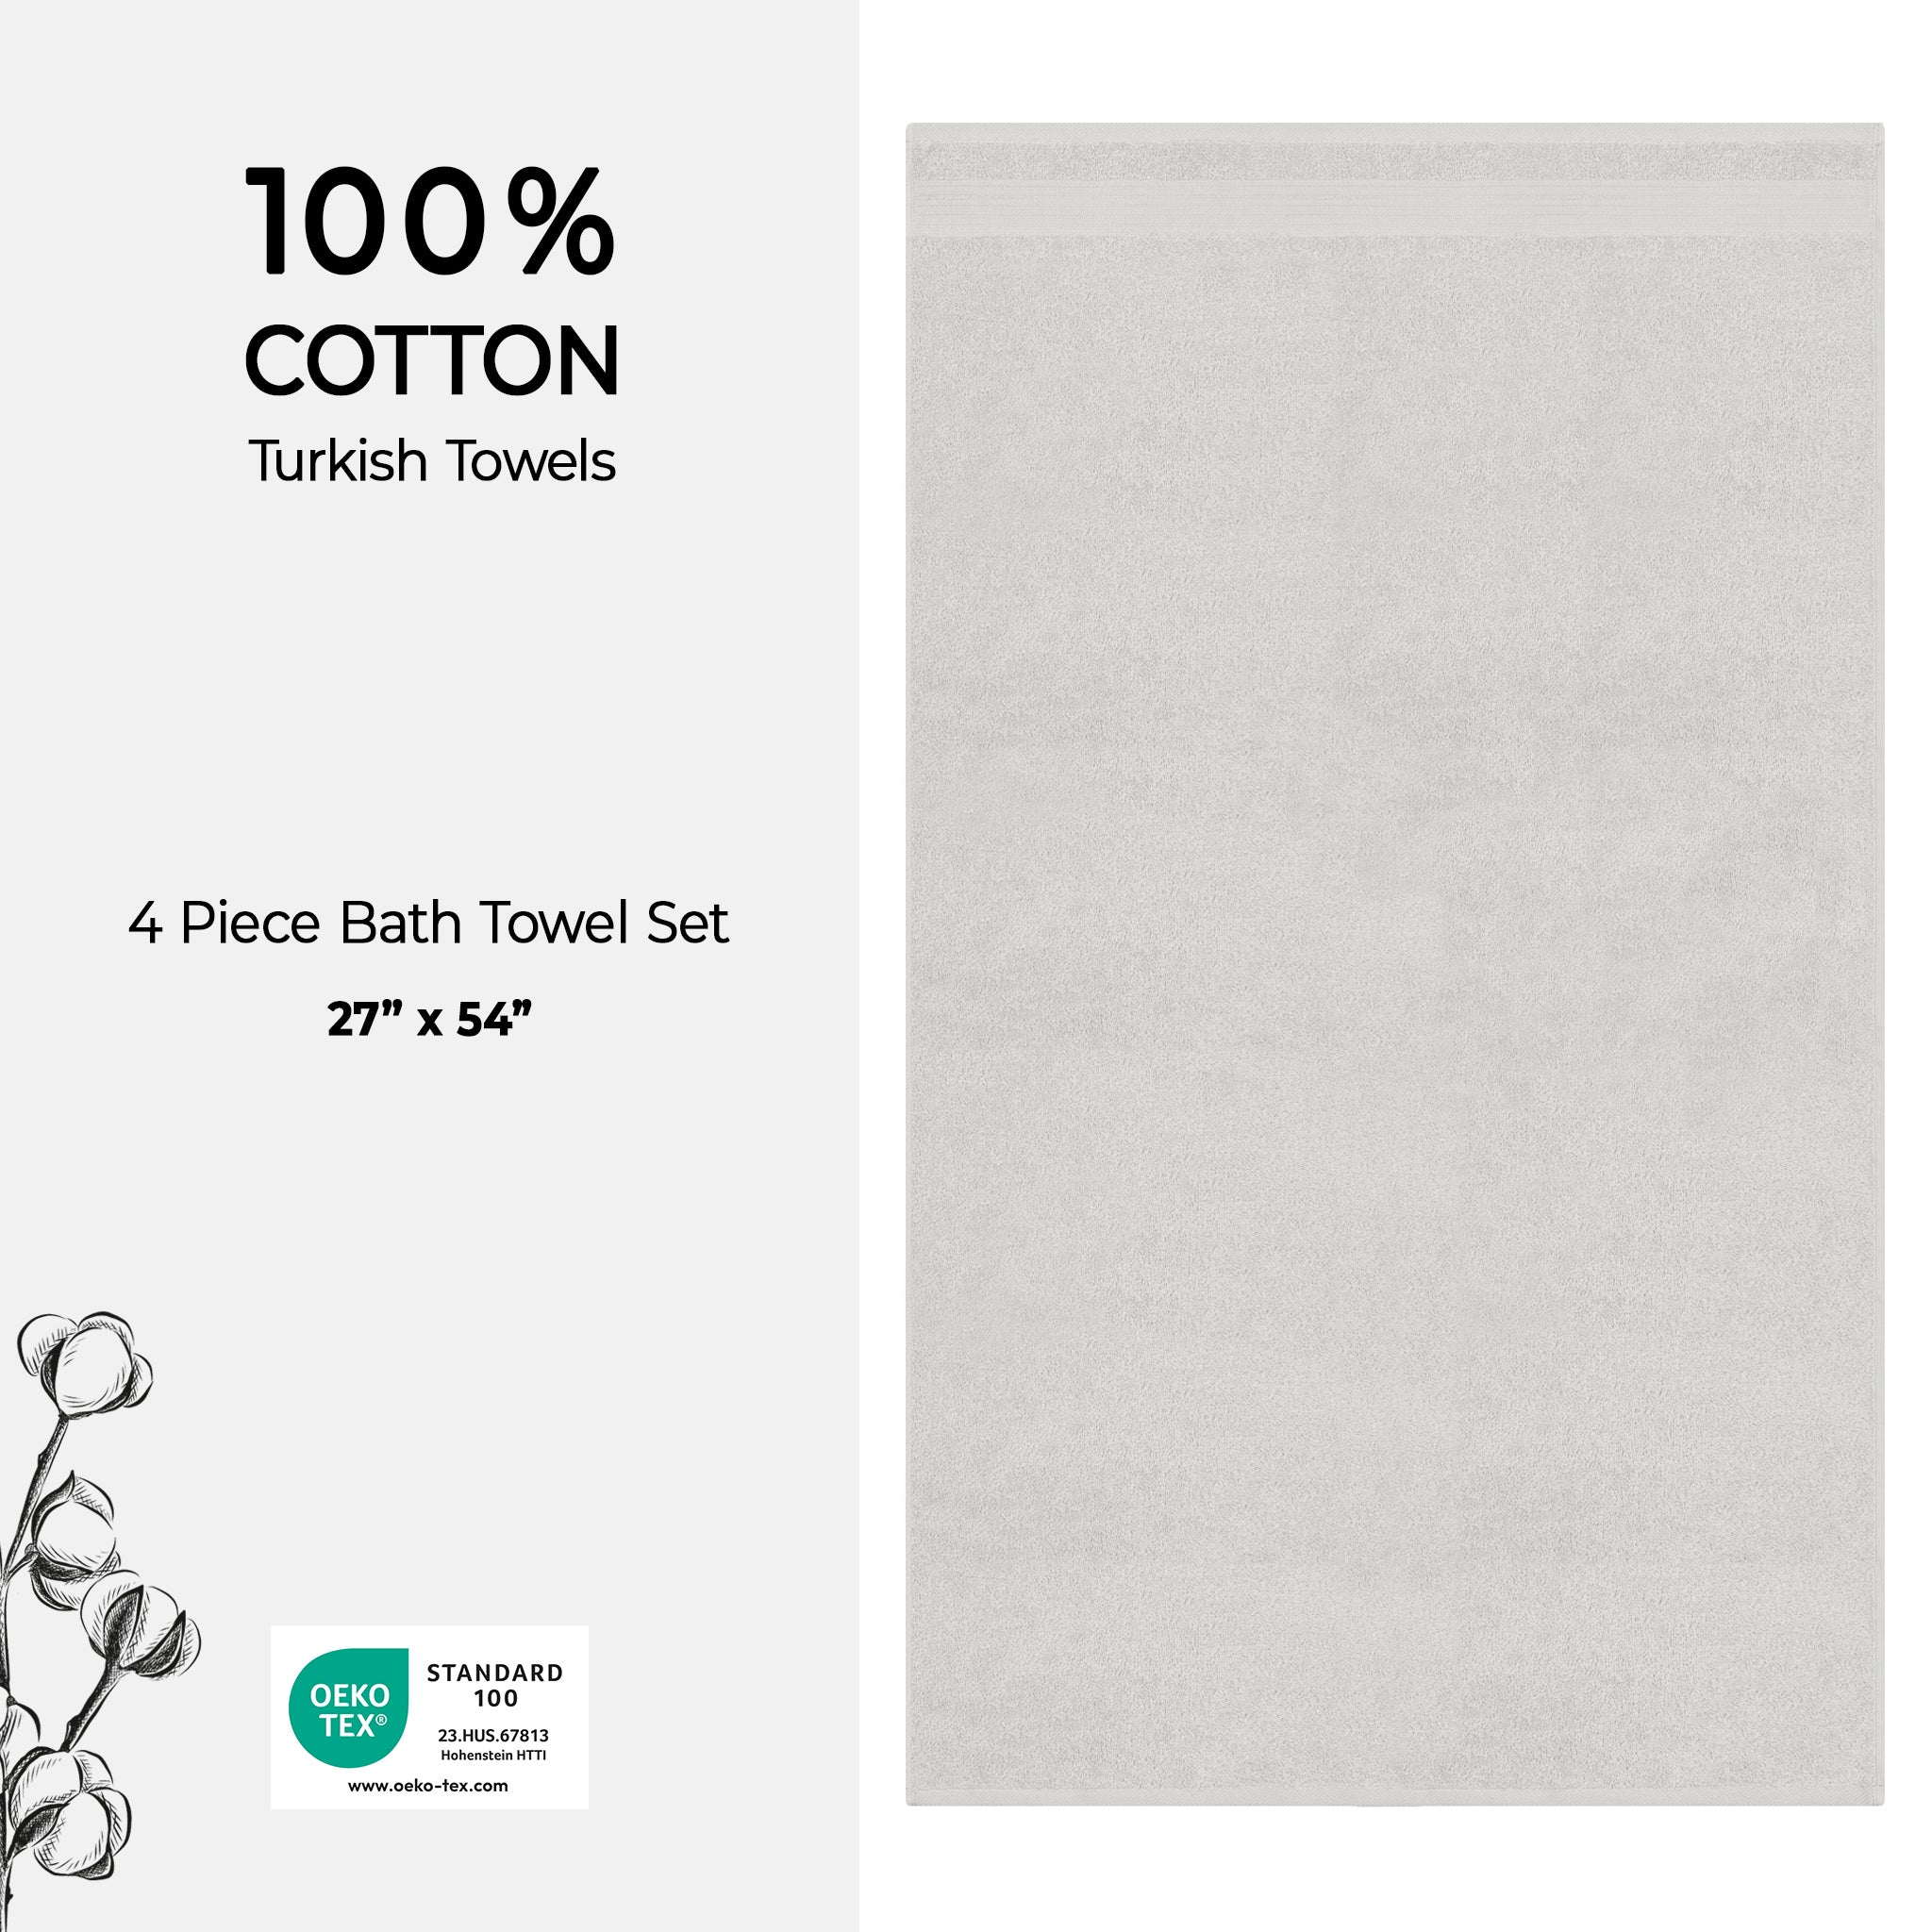 American Soft Linen Bekos 100% Cotton Turkish Towels, 4 Piece Bath Towel Set -silver-gray-04